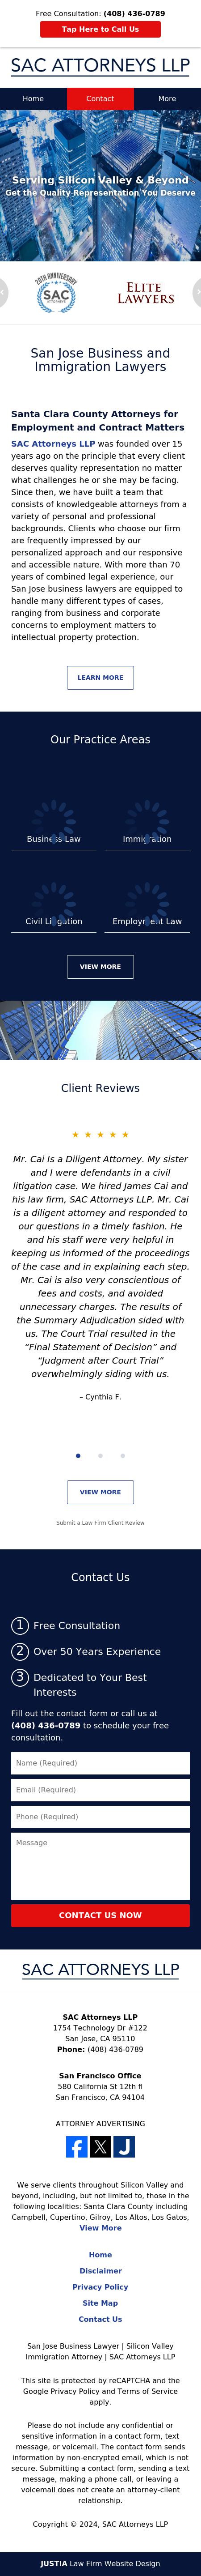 SAC Attorneys LLP - San Jose CA Lawyers